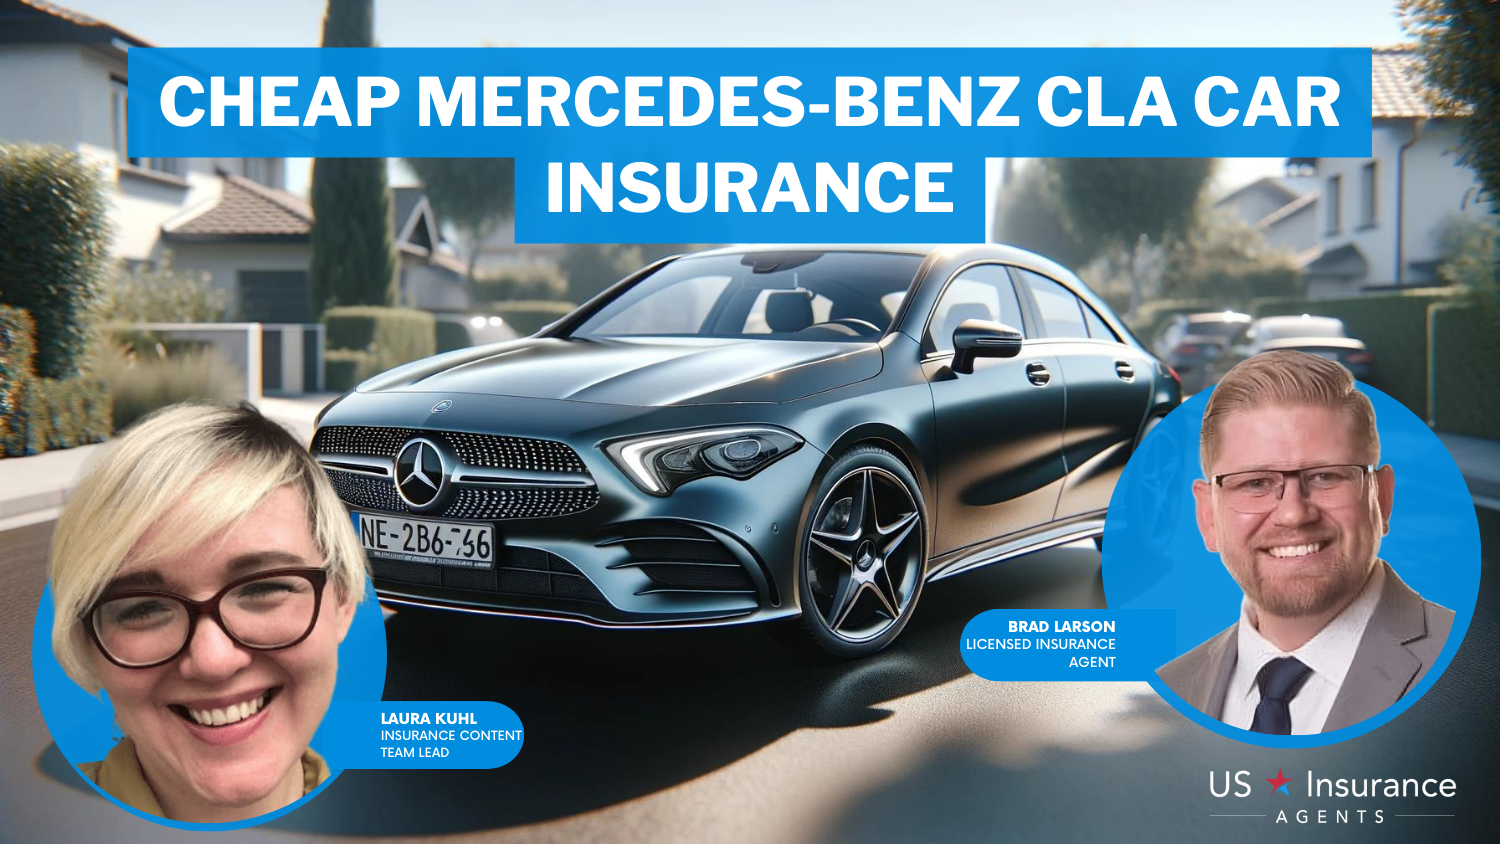 Cheap Mercedes-Benz CLA Car Insurance: State Farm, USAA, and Progressive